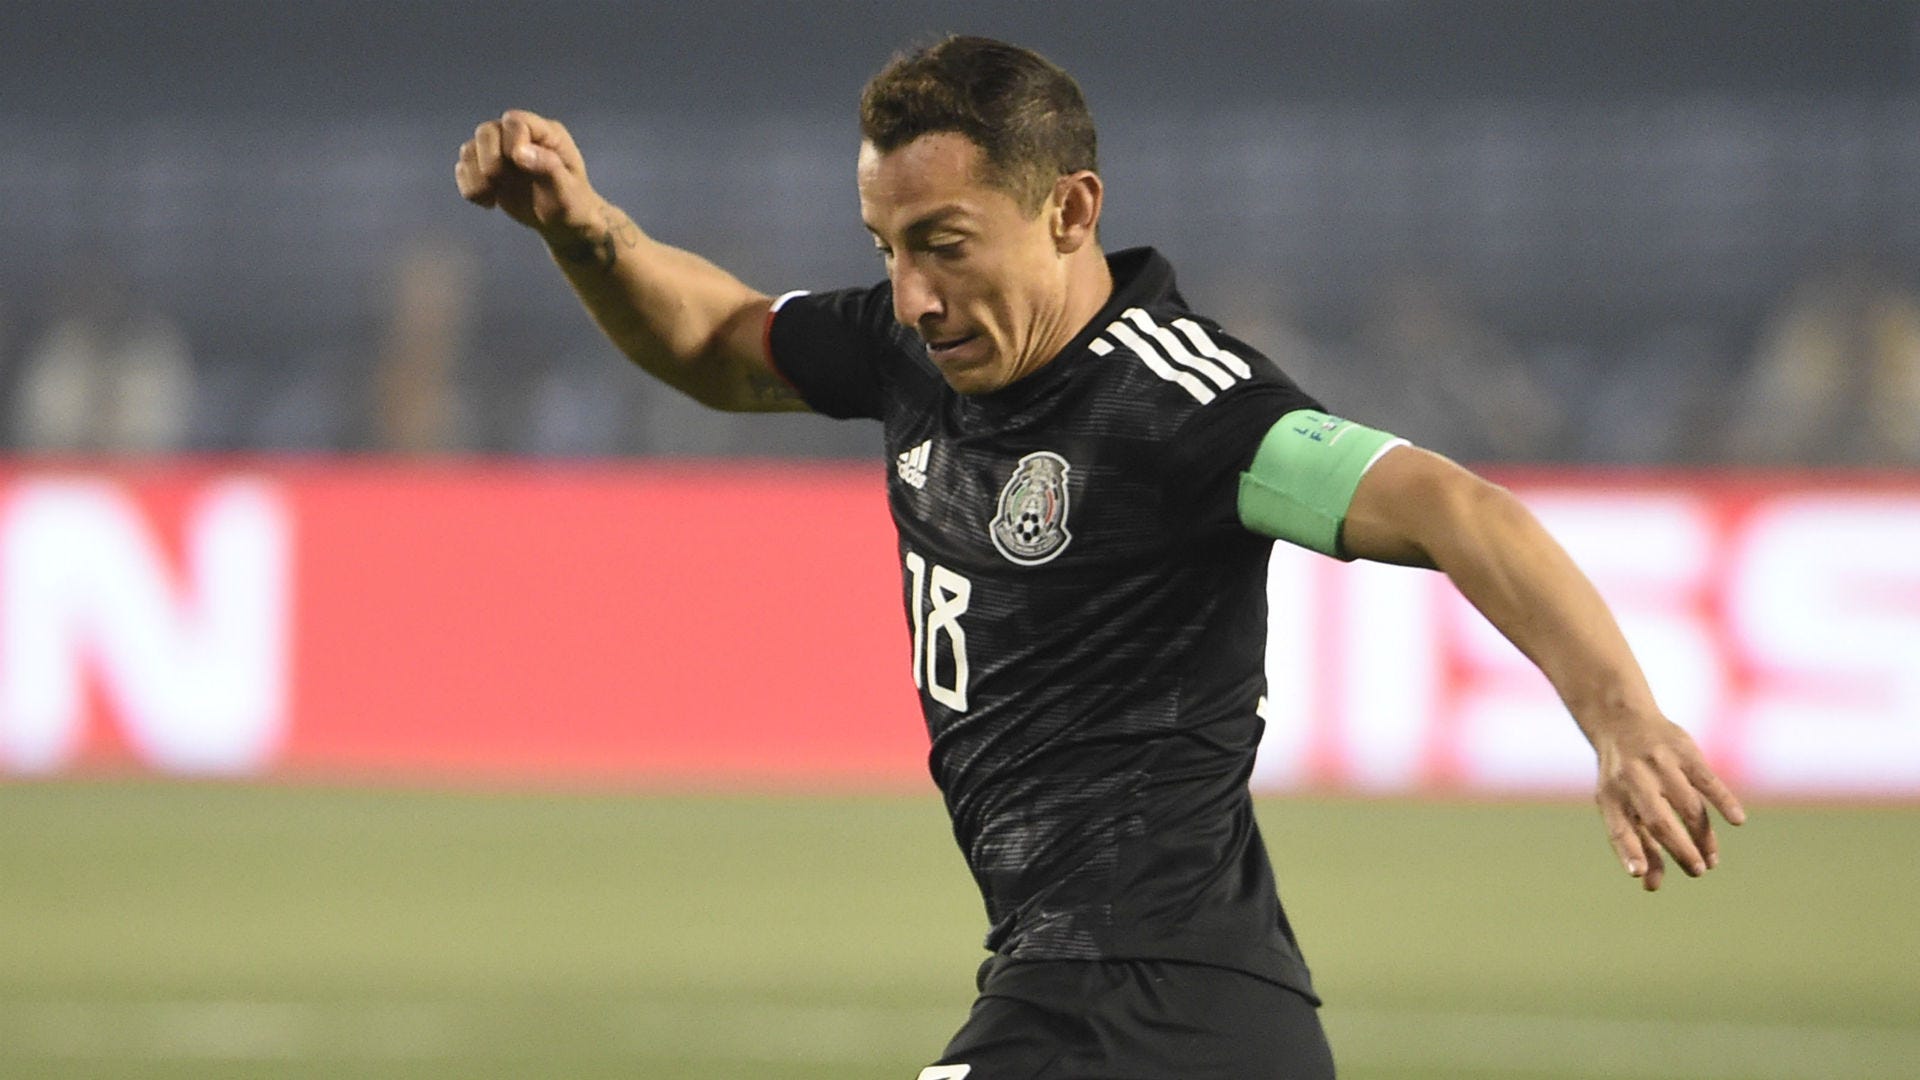 Mexico national team: Uriel Antuna hat trick shows El Tri is still